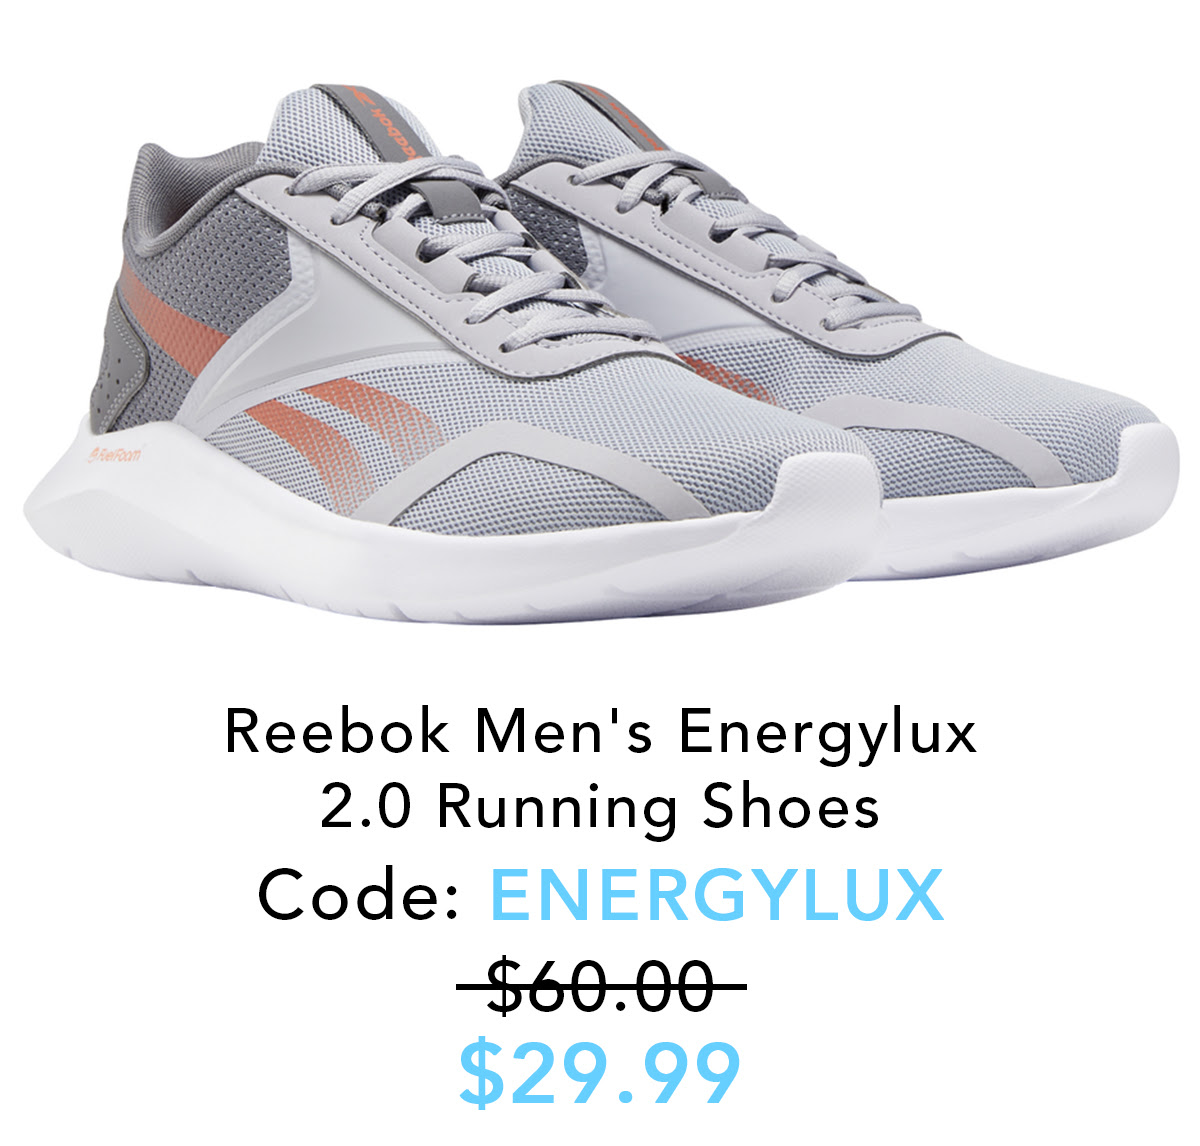 Reebok Men's Energylux 2.0 Running Shoes